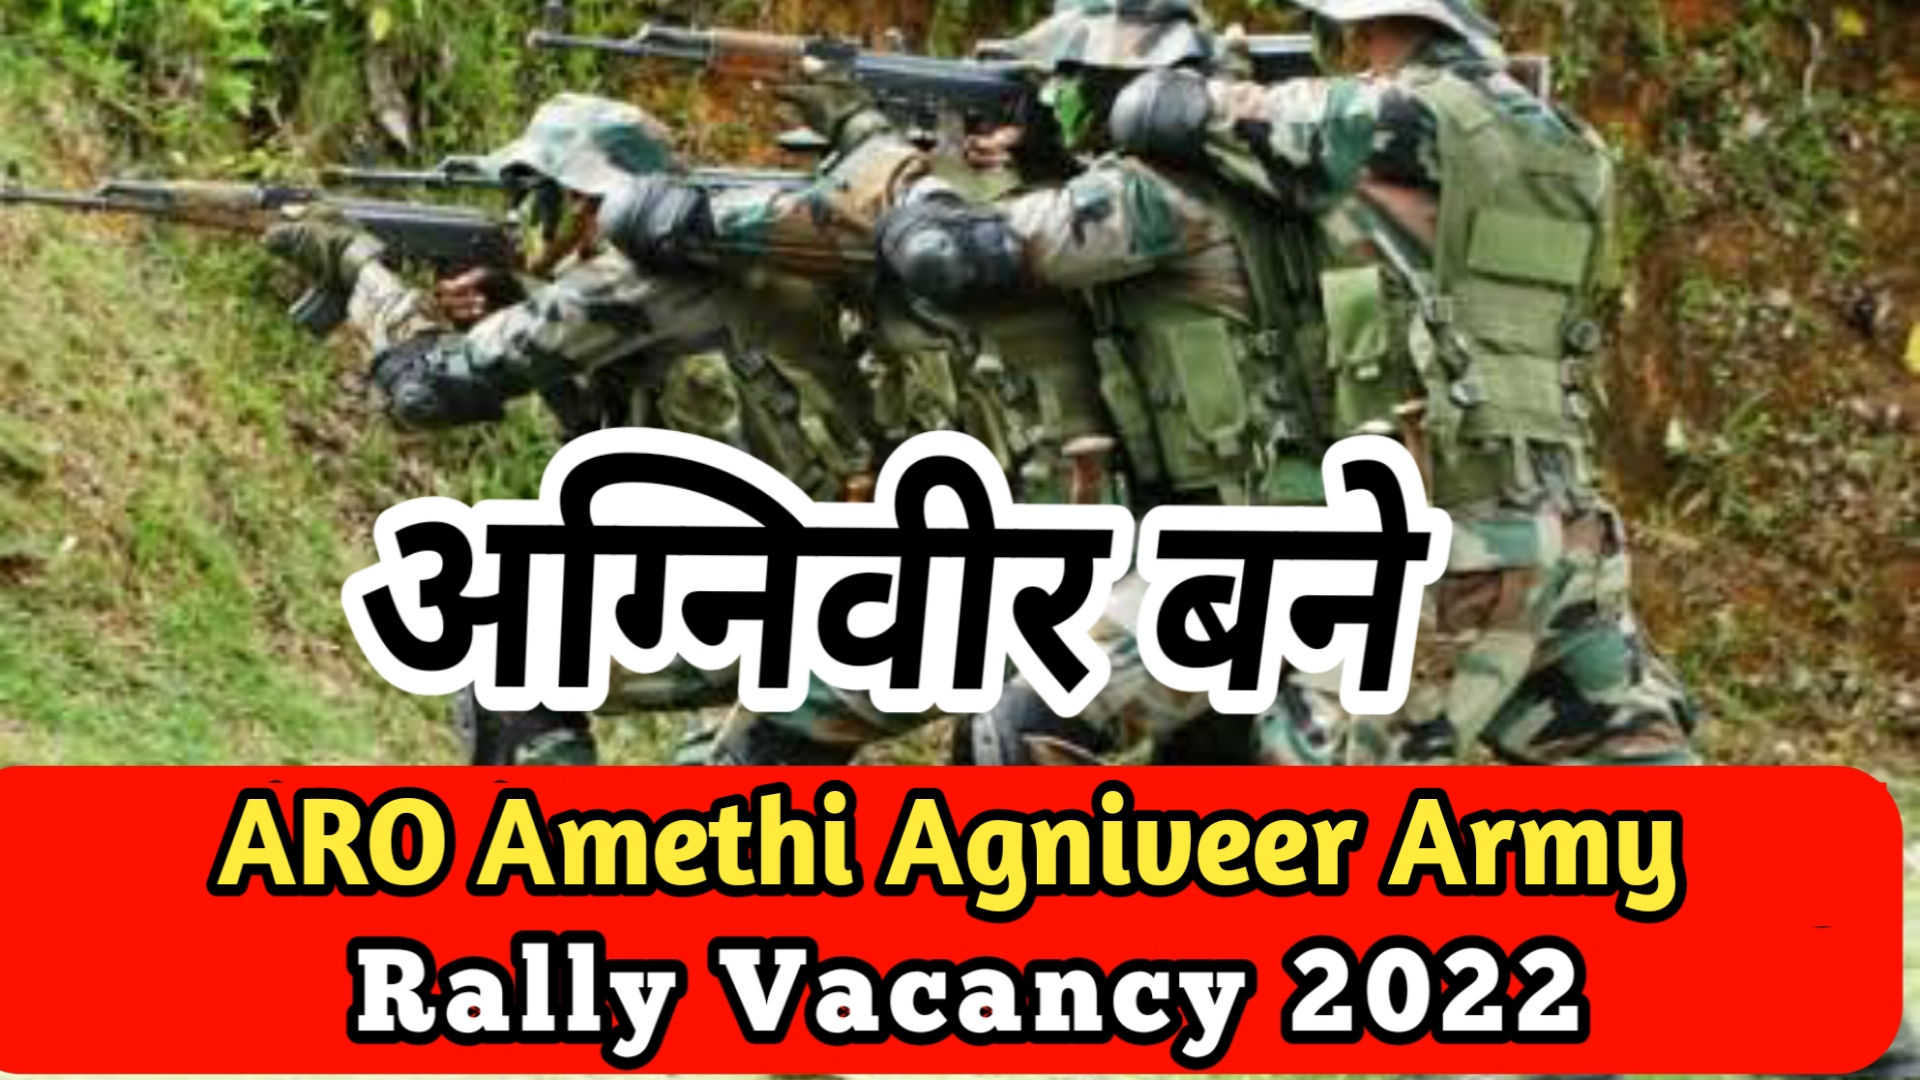 ARO Amethi Agniveer Army Rally Vacancy 2022